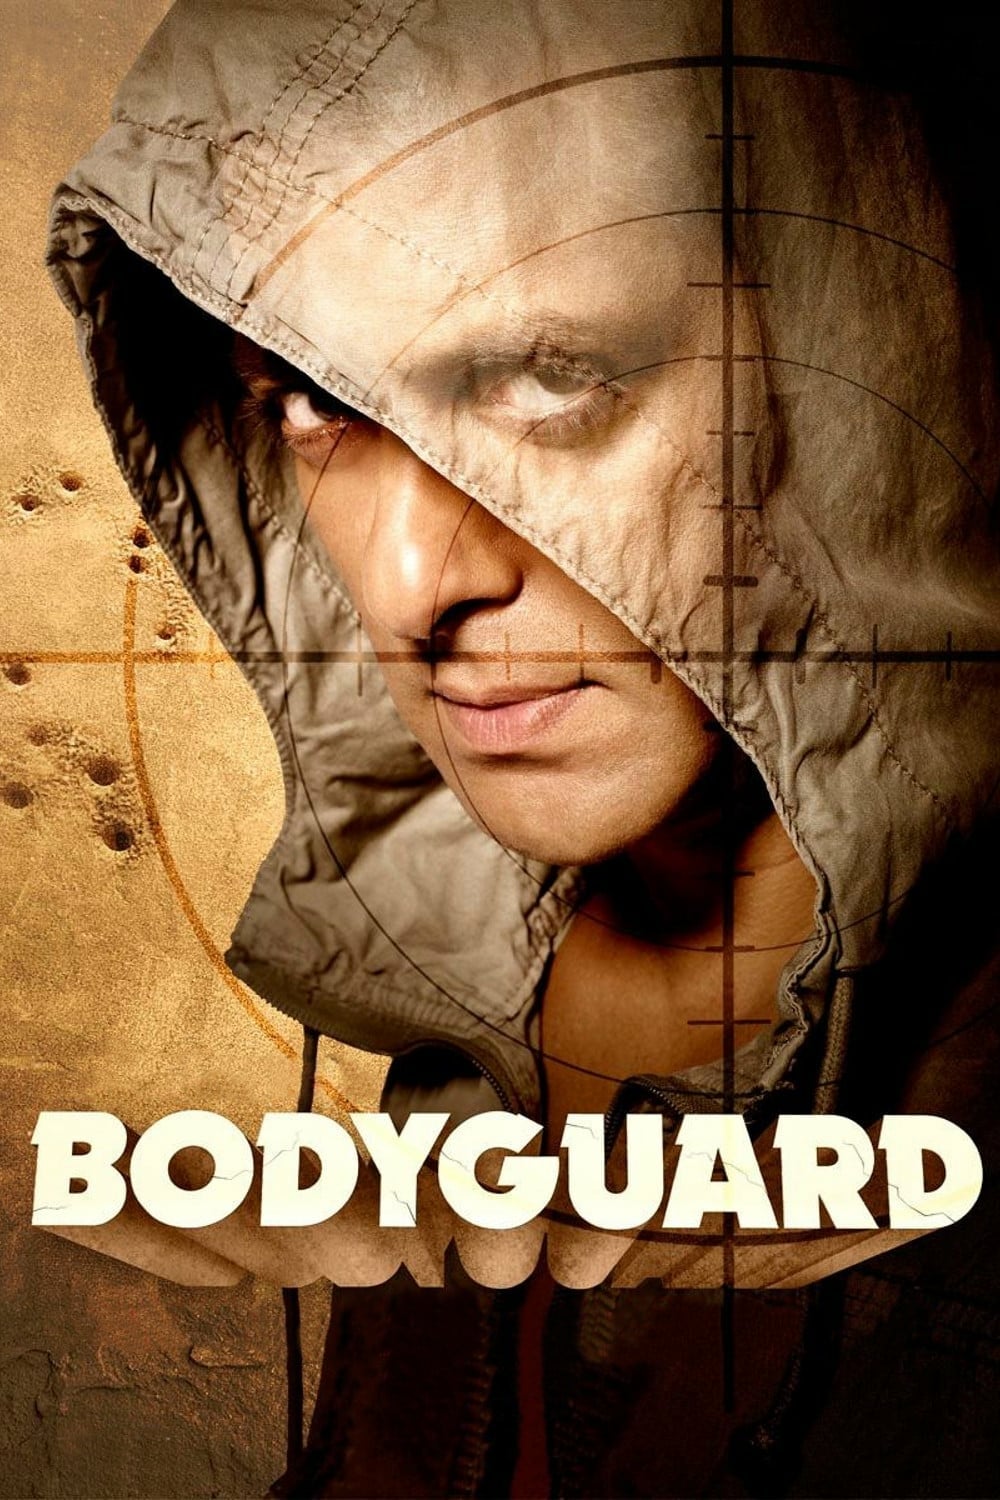 Bodyguard full movie download 2011